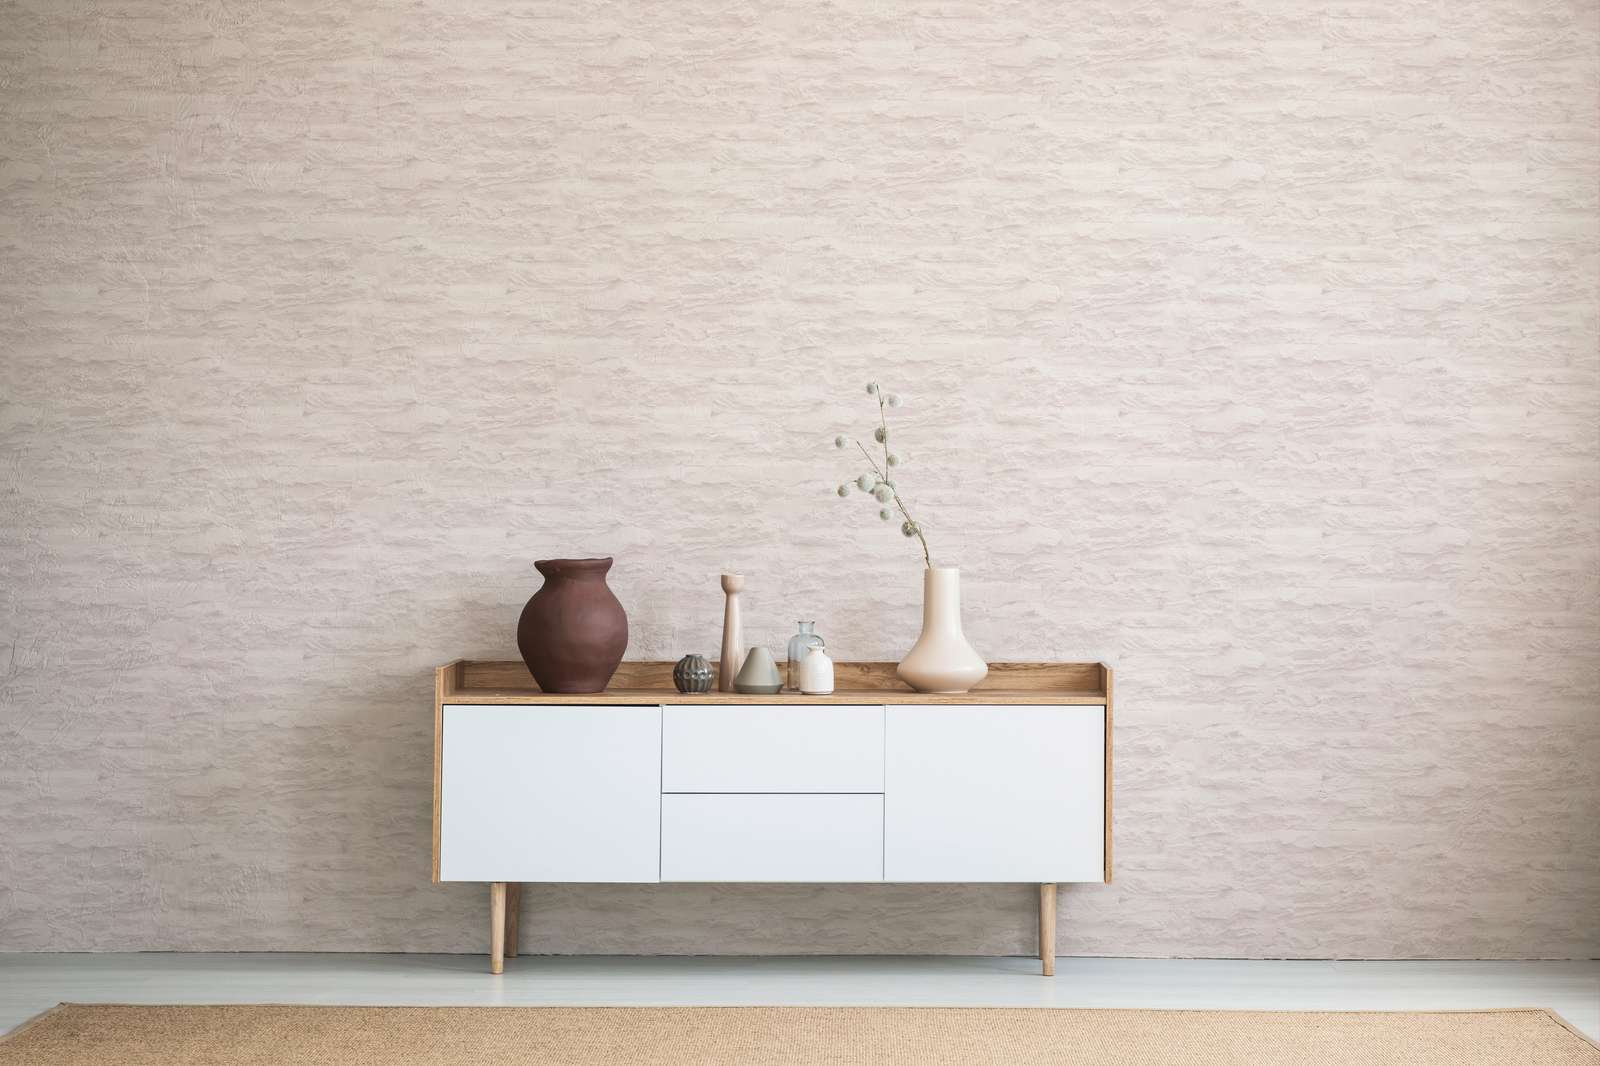             Bright non-woven wallpaper in wall optics with natural stones & plaster - cream, white
        